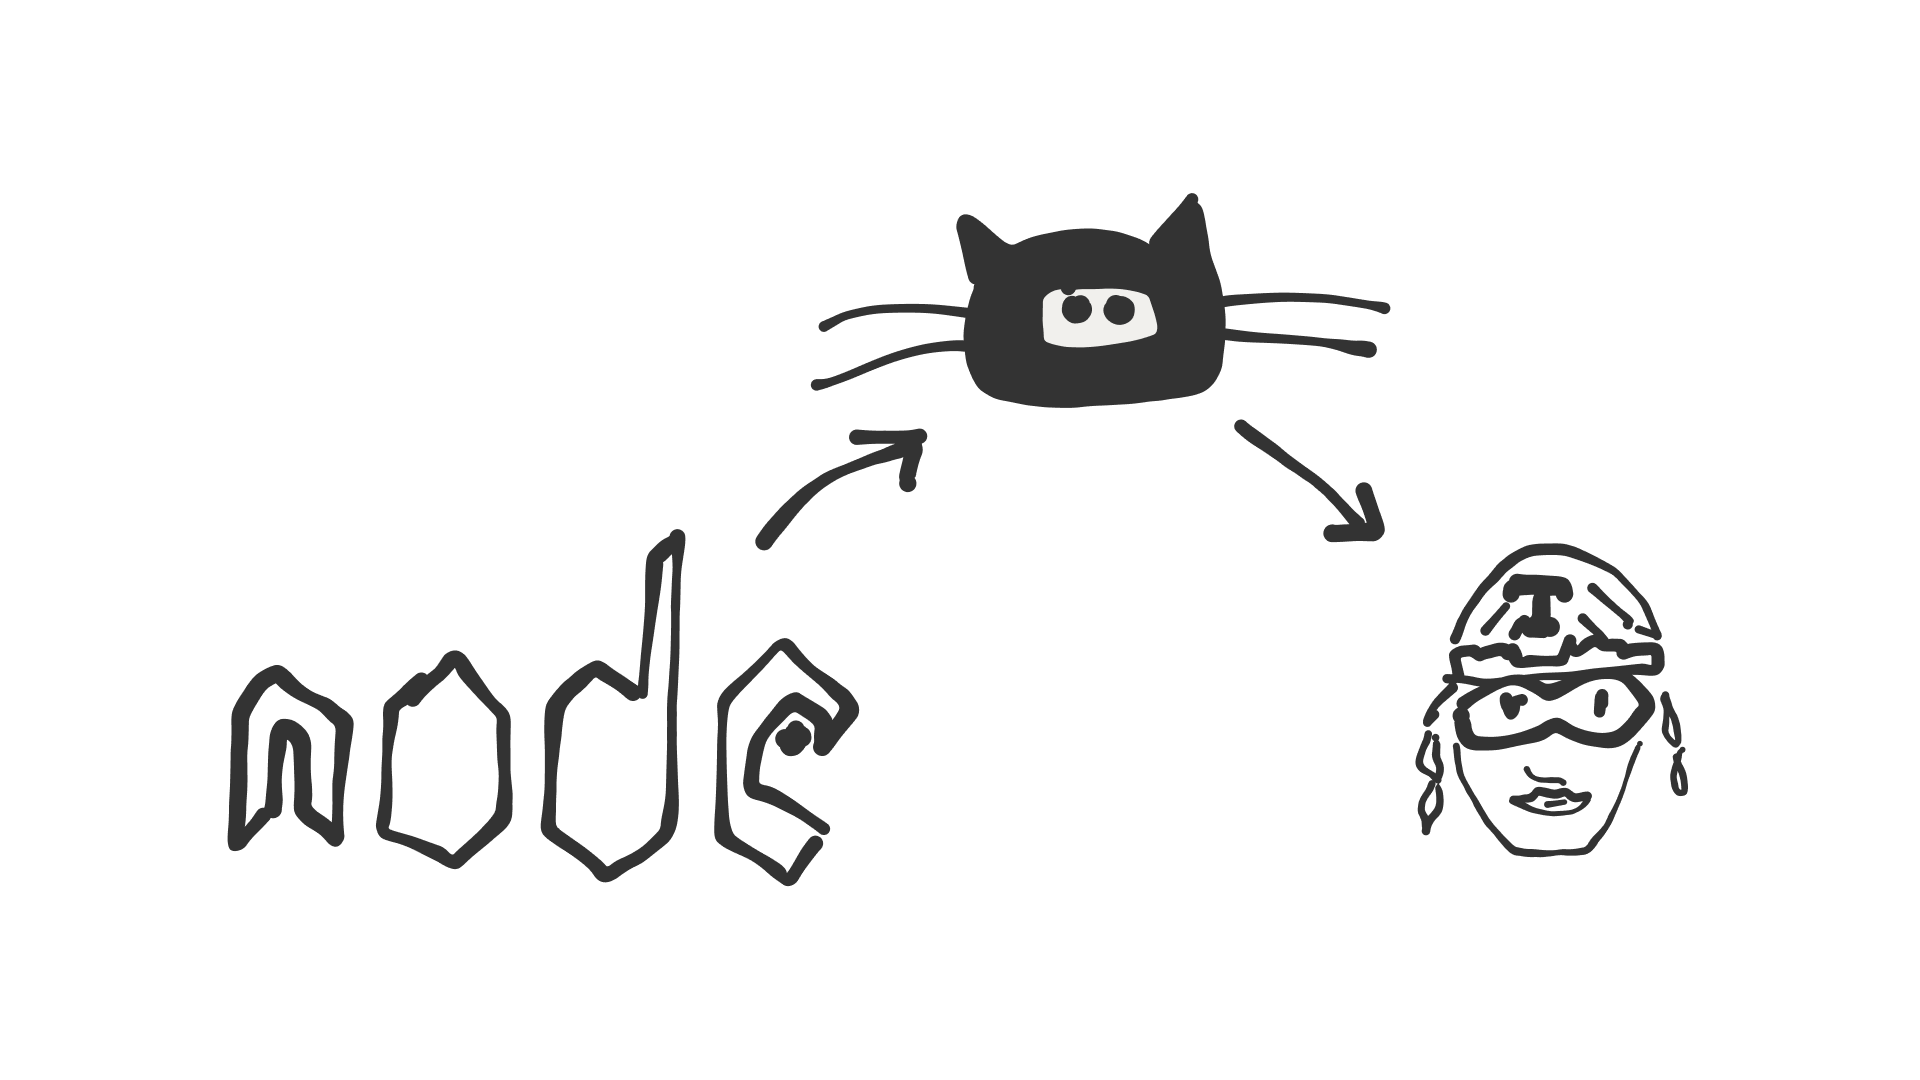 Node.js-logo, GitHub cat and Travis CI-person.